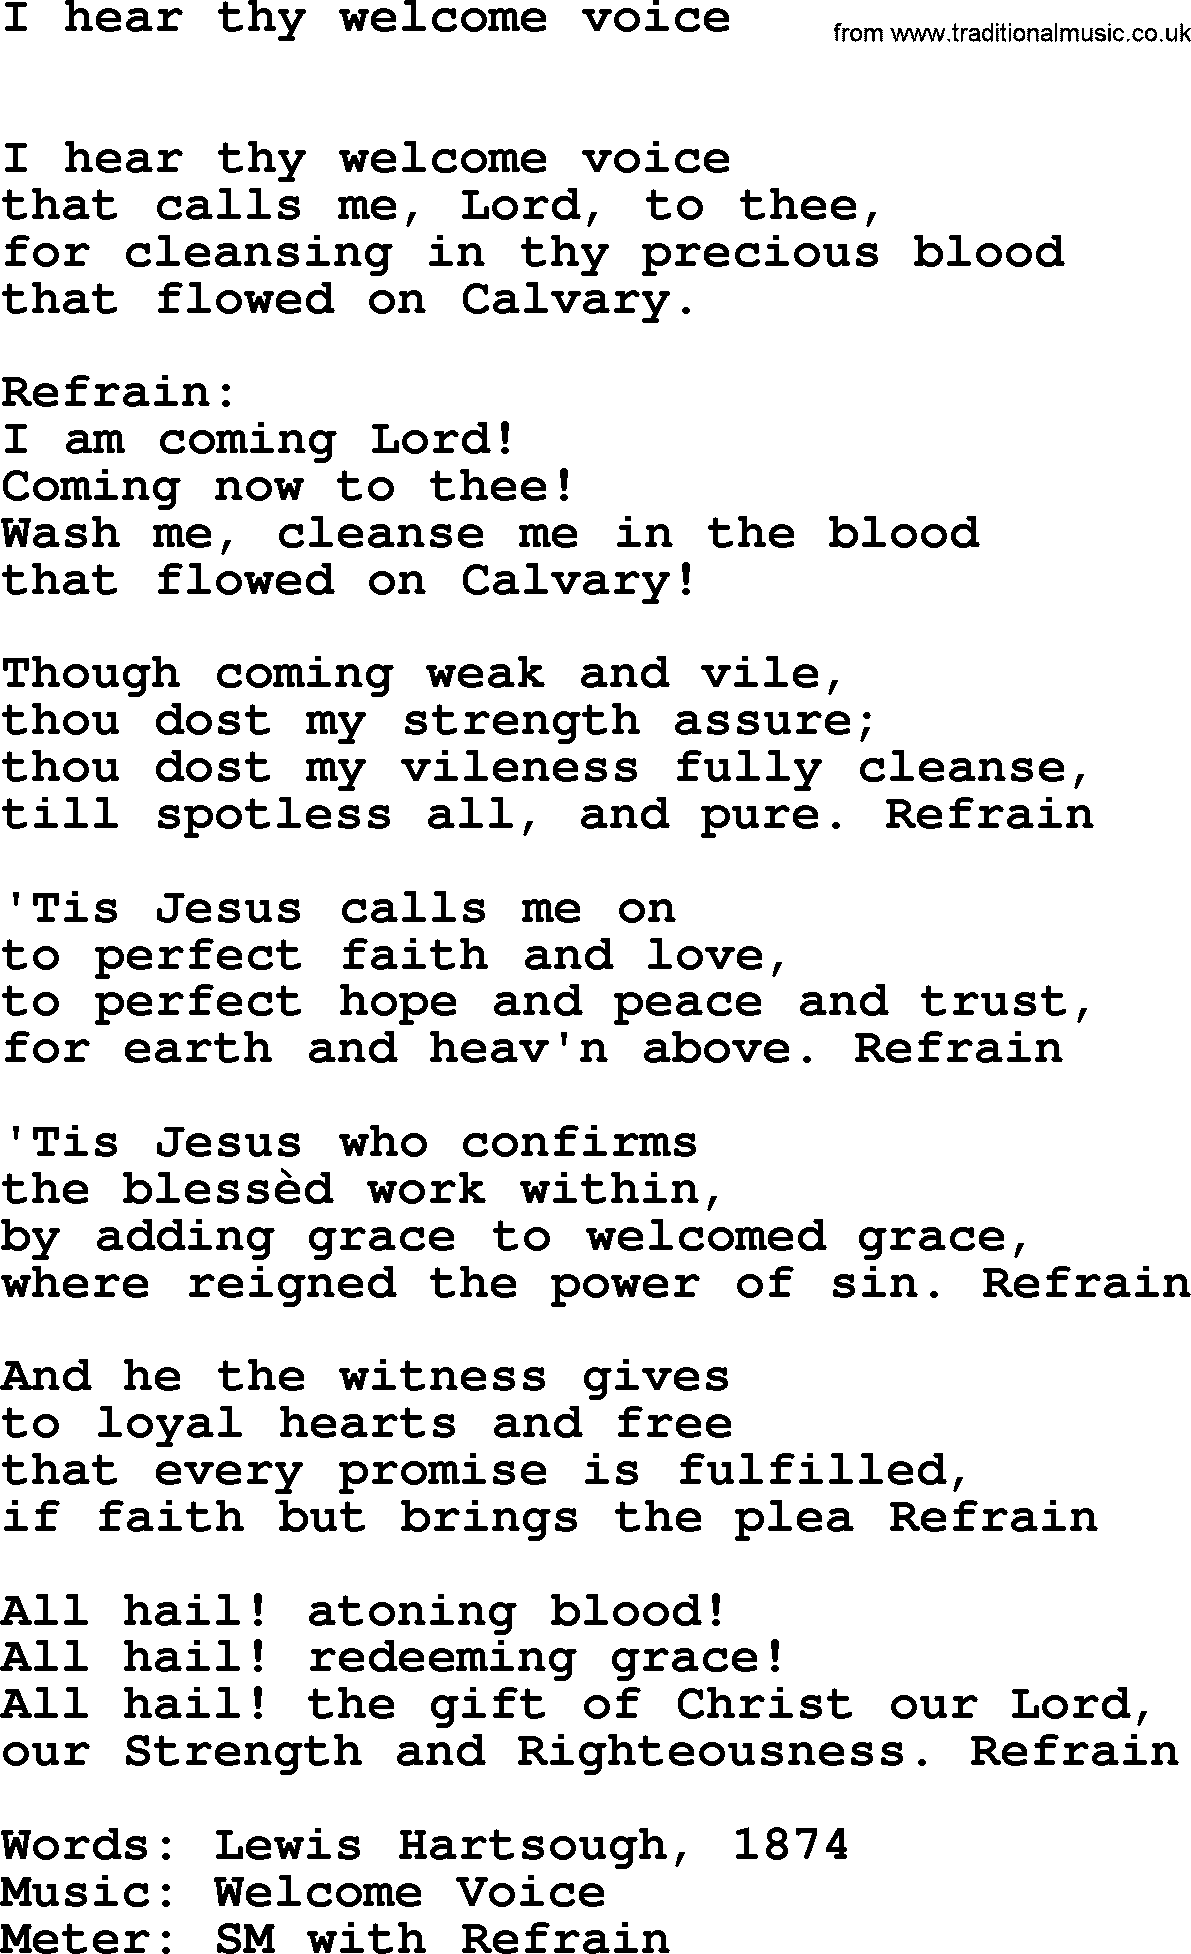 Book of Common Praise Hymn: I Hear Thy Welcome Voice.txt lyrics with midi music